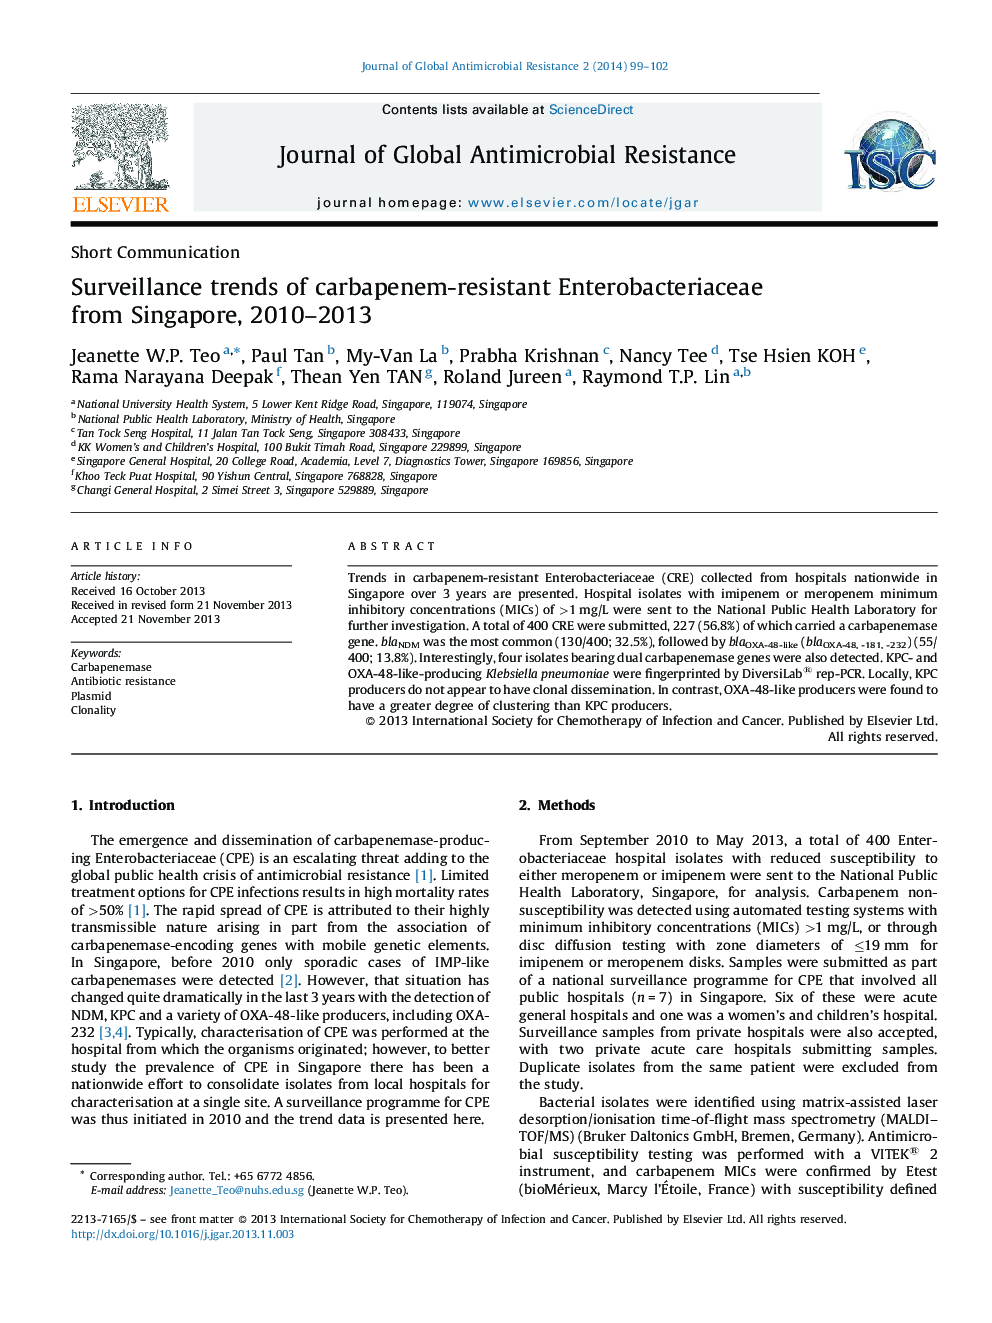 Surveillance trends of carbapenem-resistant Enterobacteriaceae from Singapore, 2010–2013